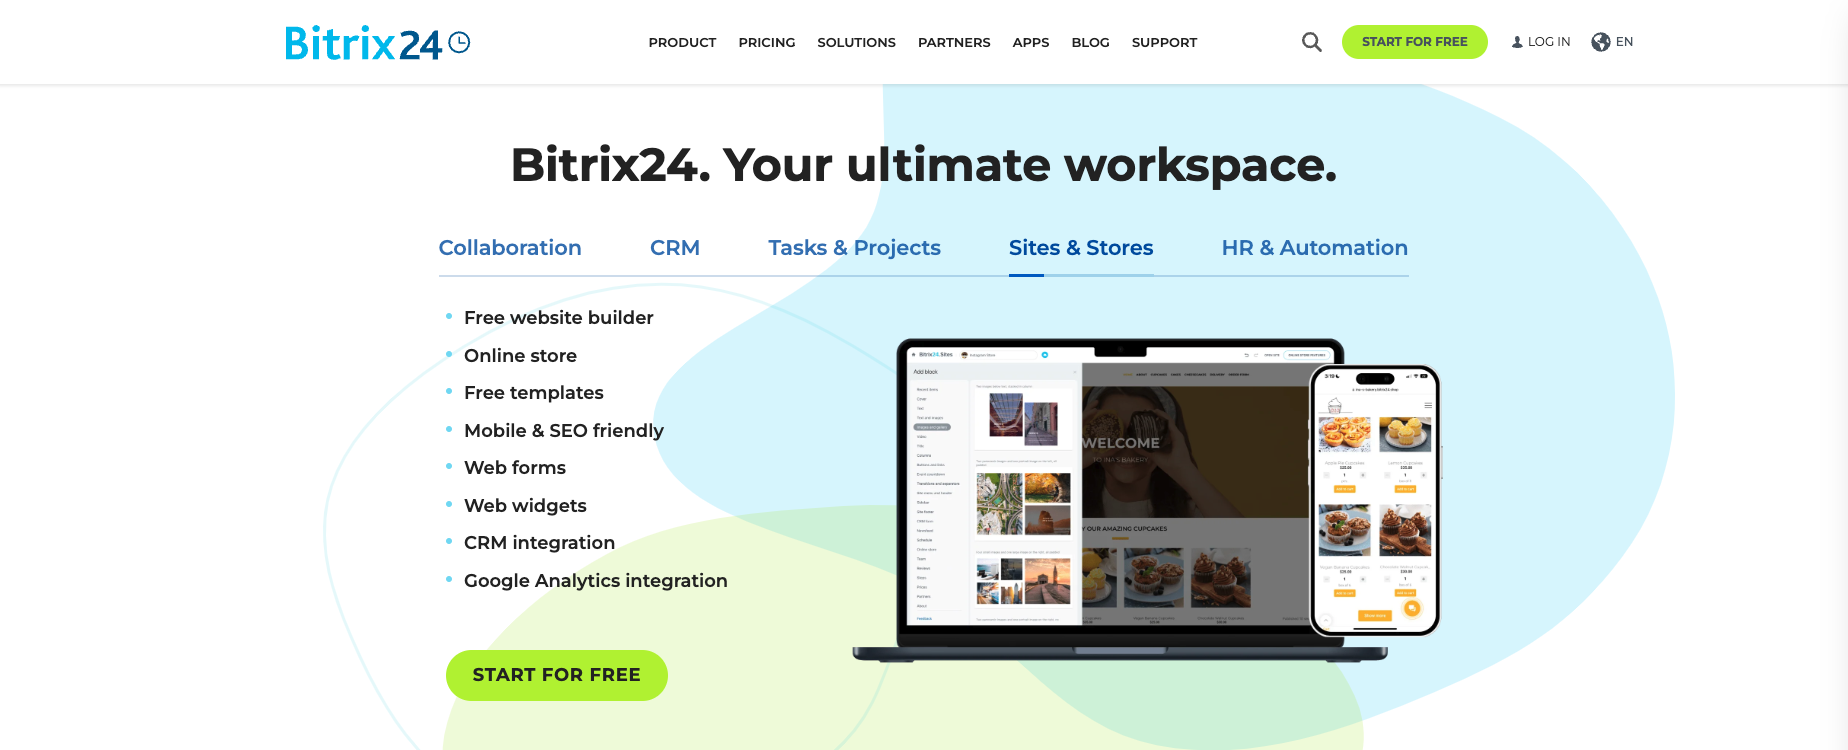 Bitrix24 homepage screenshot